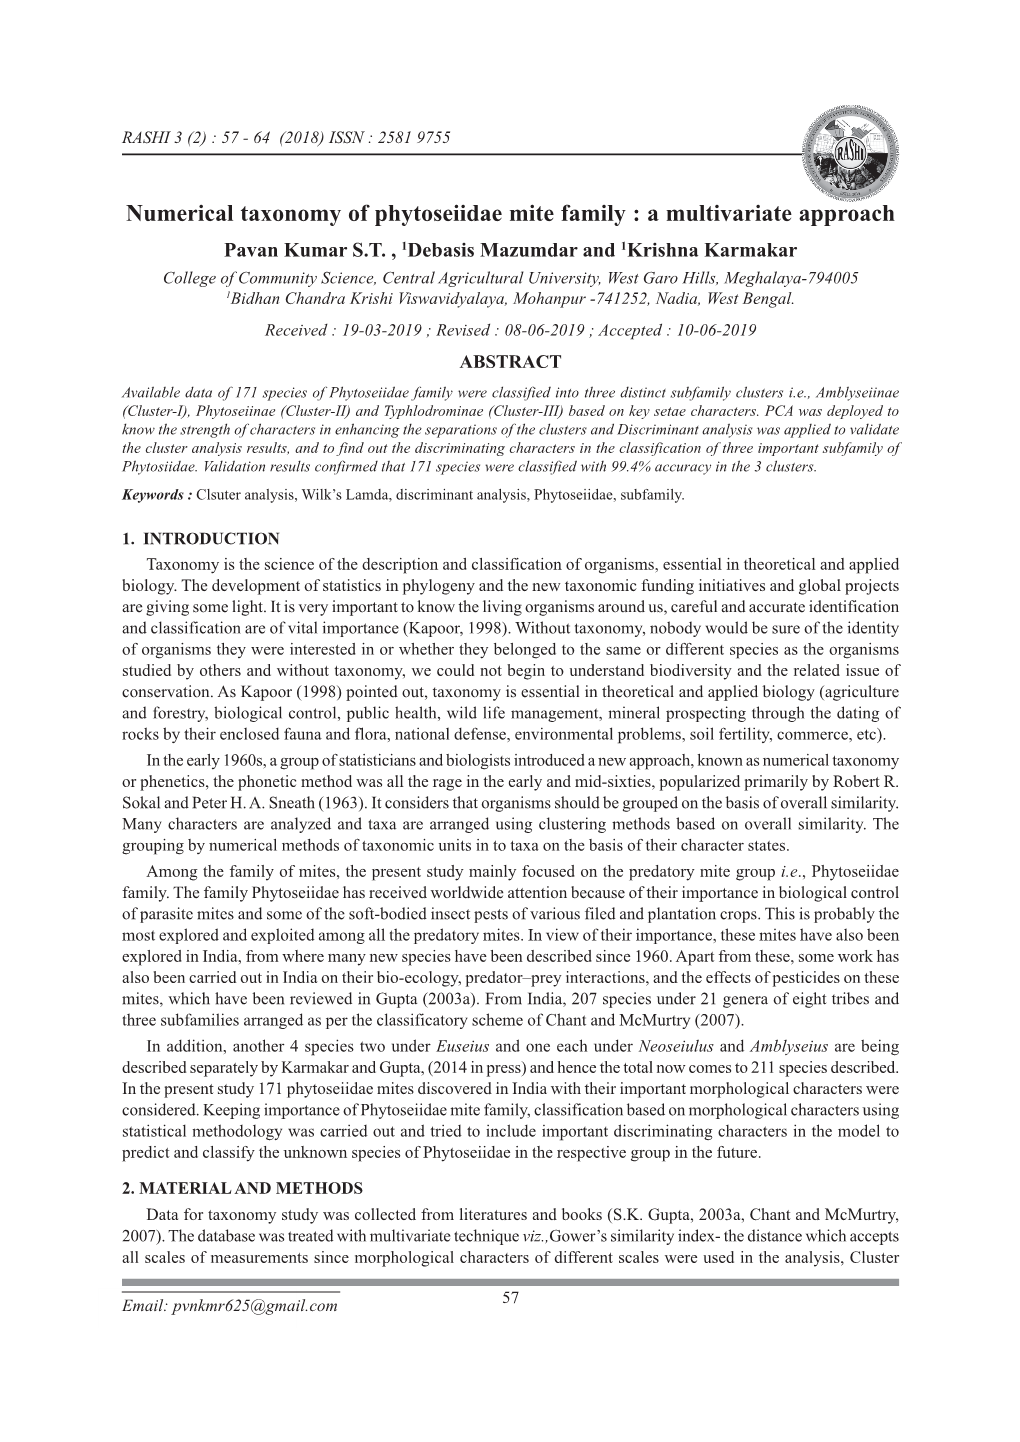 Numerical Taxonomy of Phytoseiidae Mite Family : a Multivariate Approach Pavan Kumar S.T